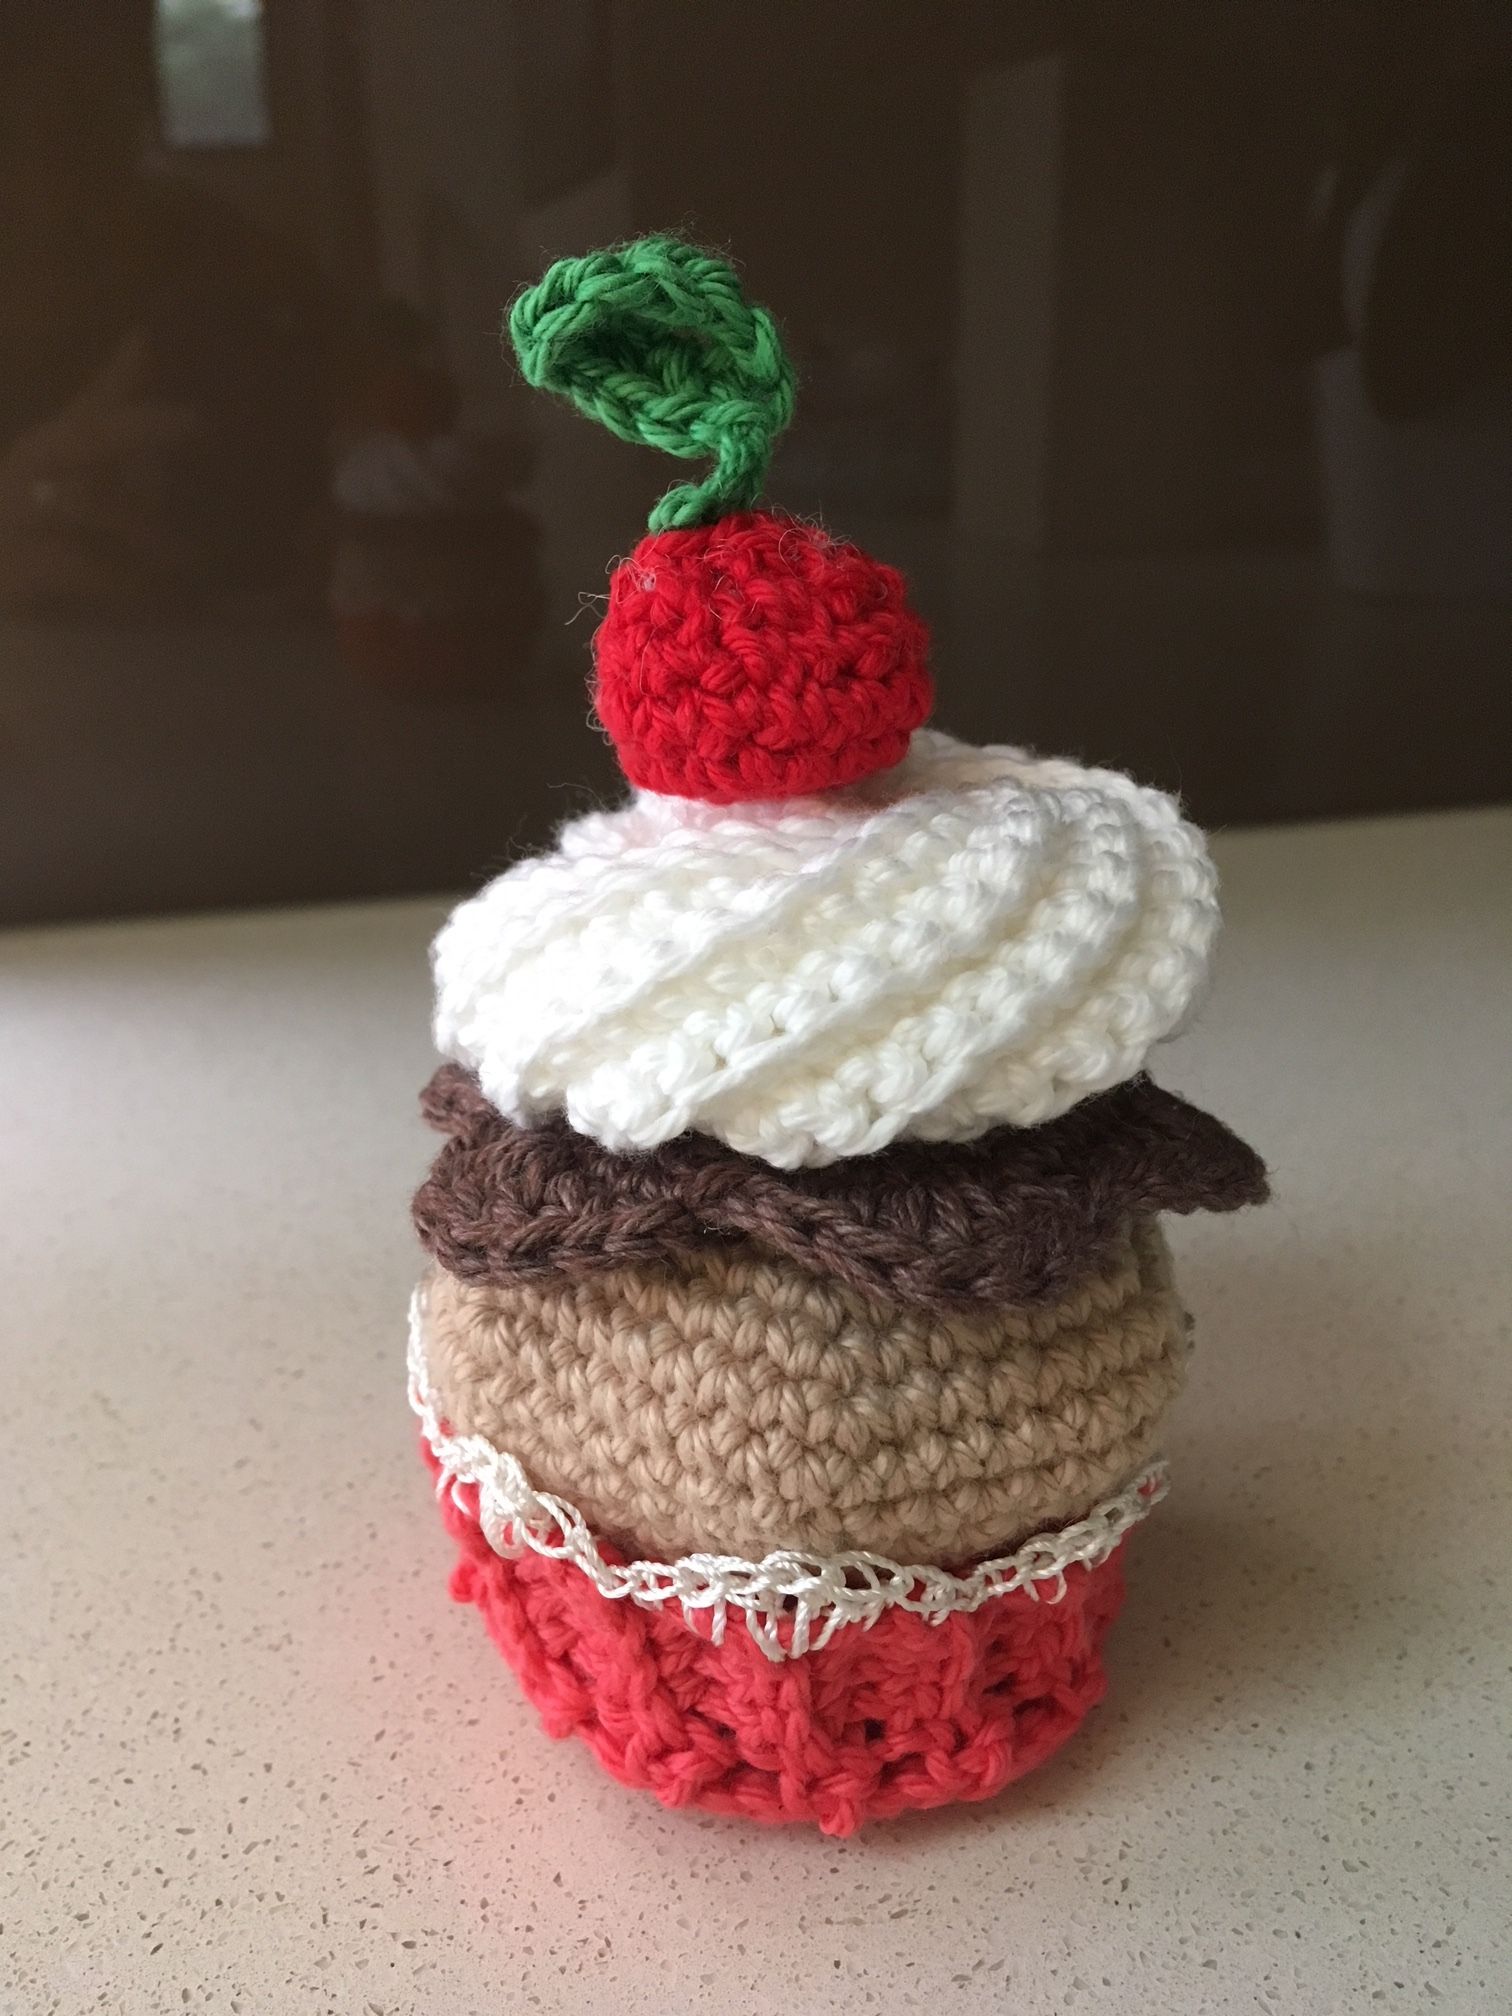 my first crochet cupcake!